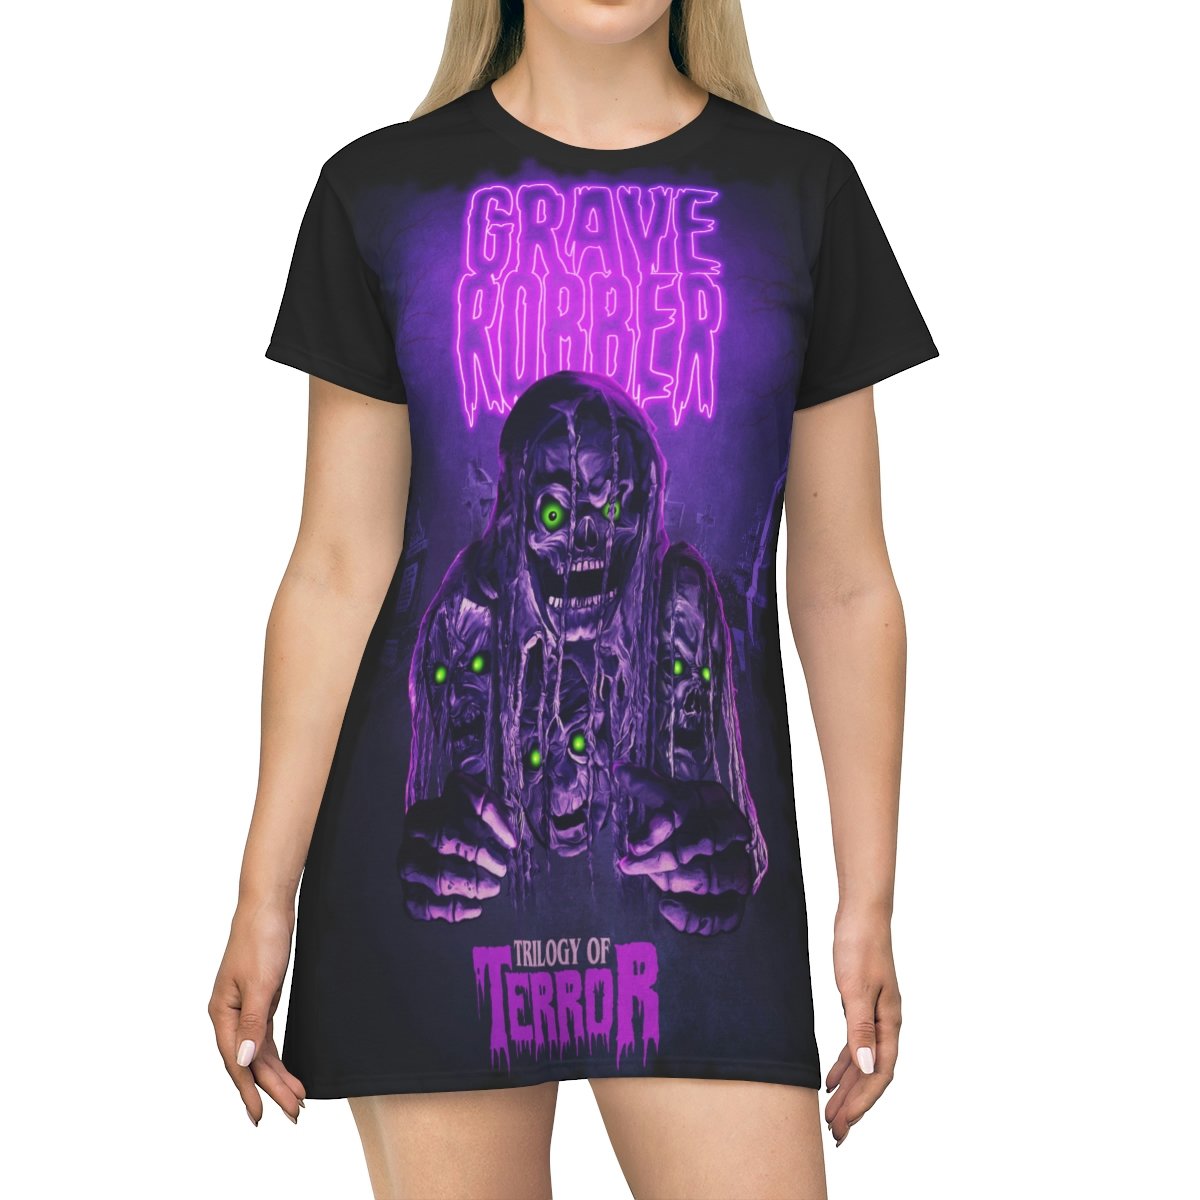 Grave Robber – Trilogy of Terror  T-shirt Dress